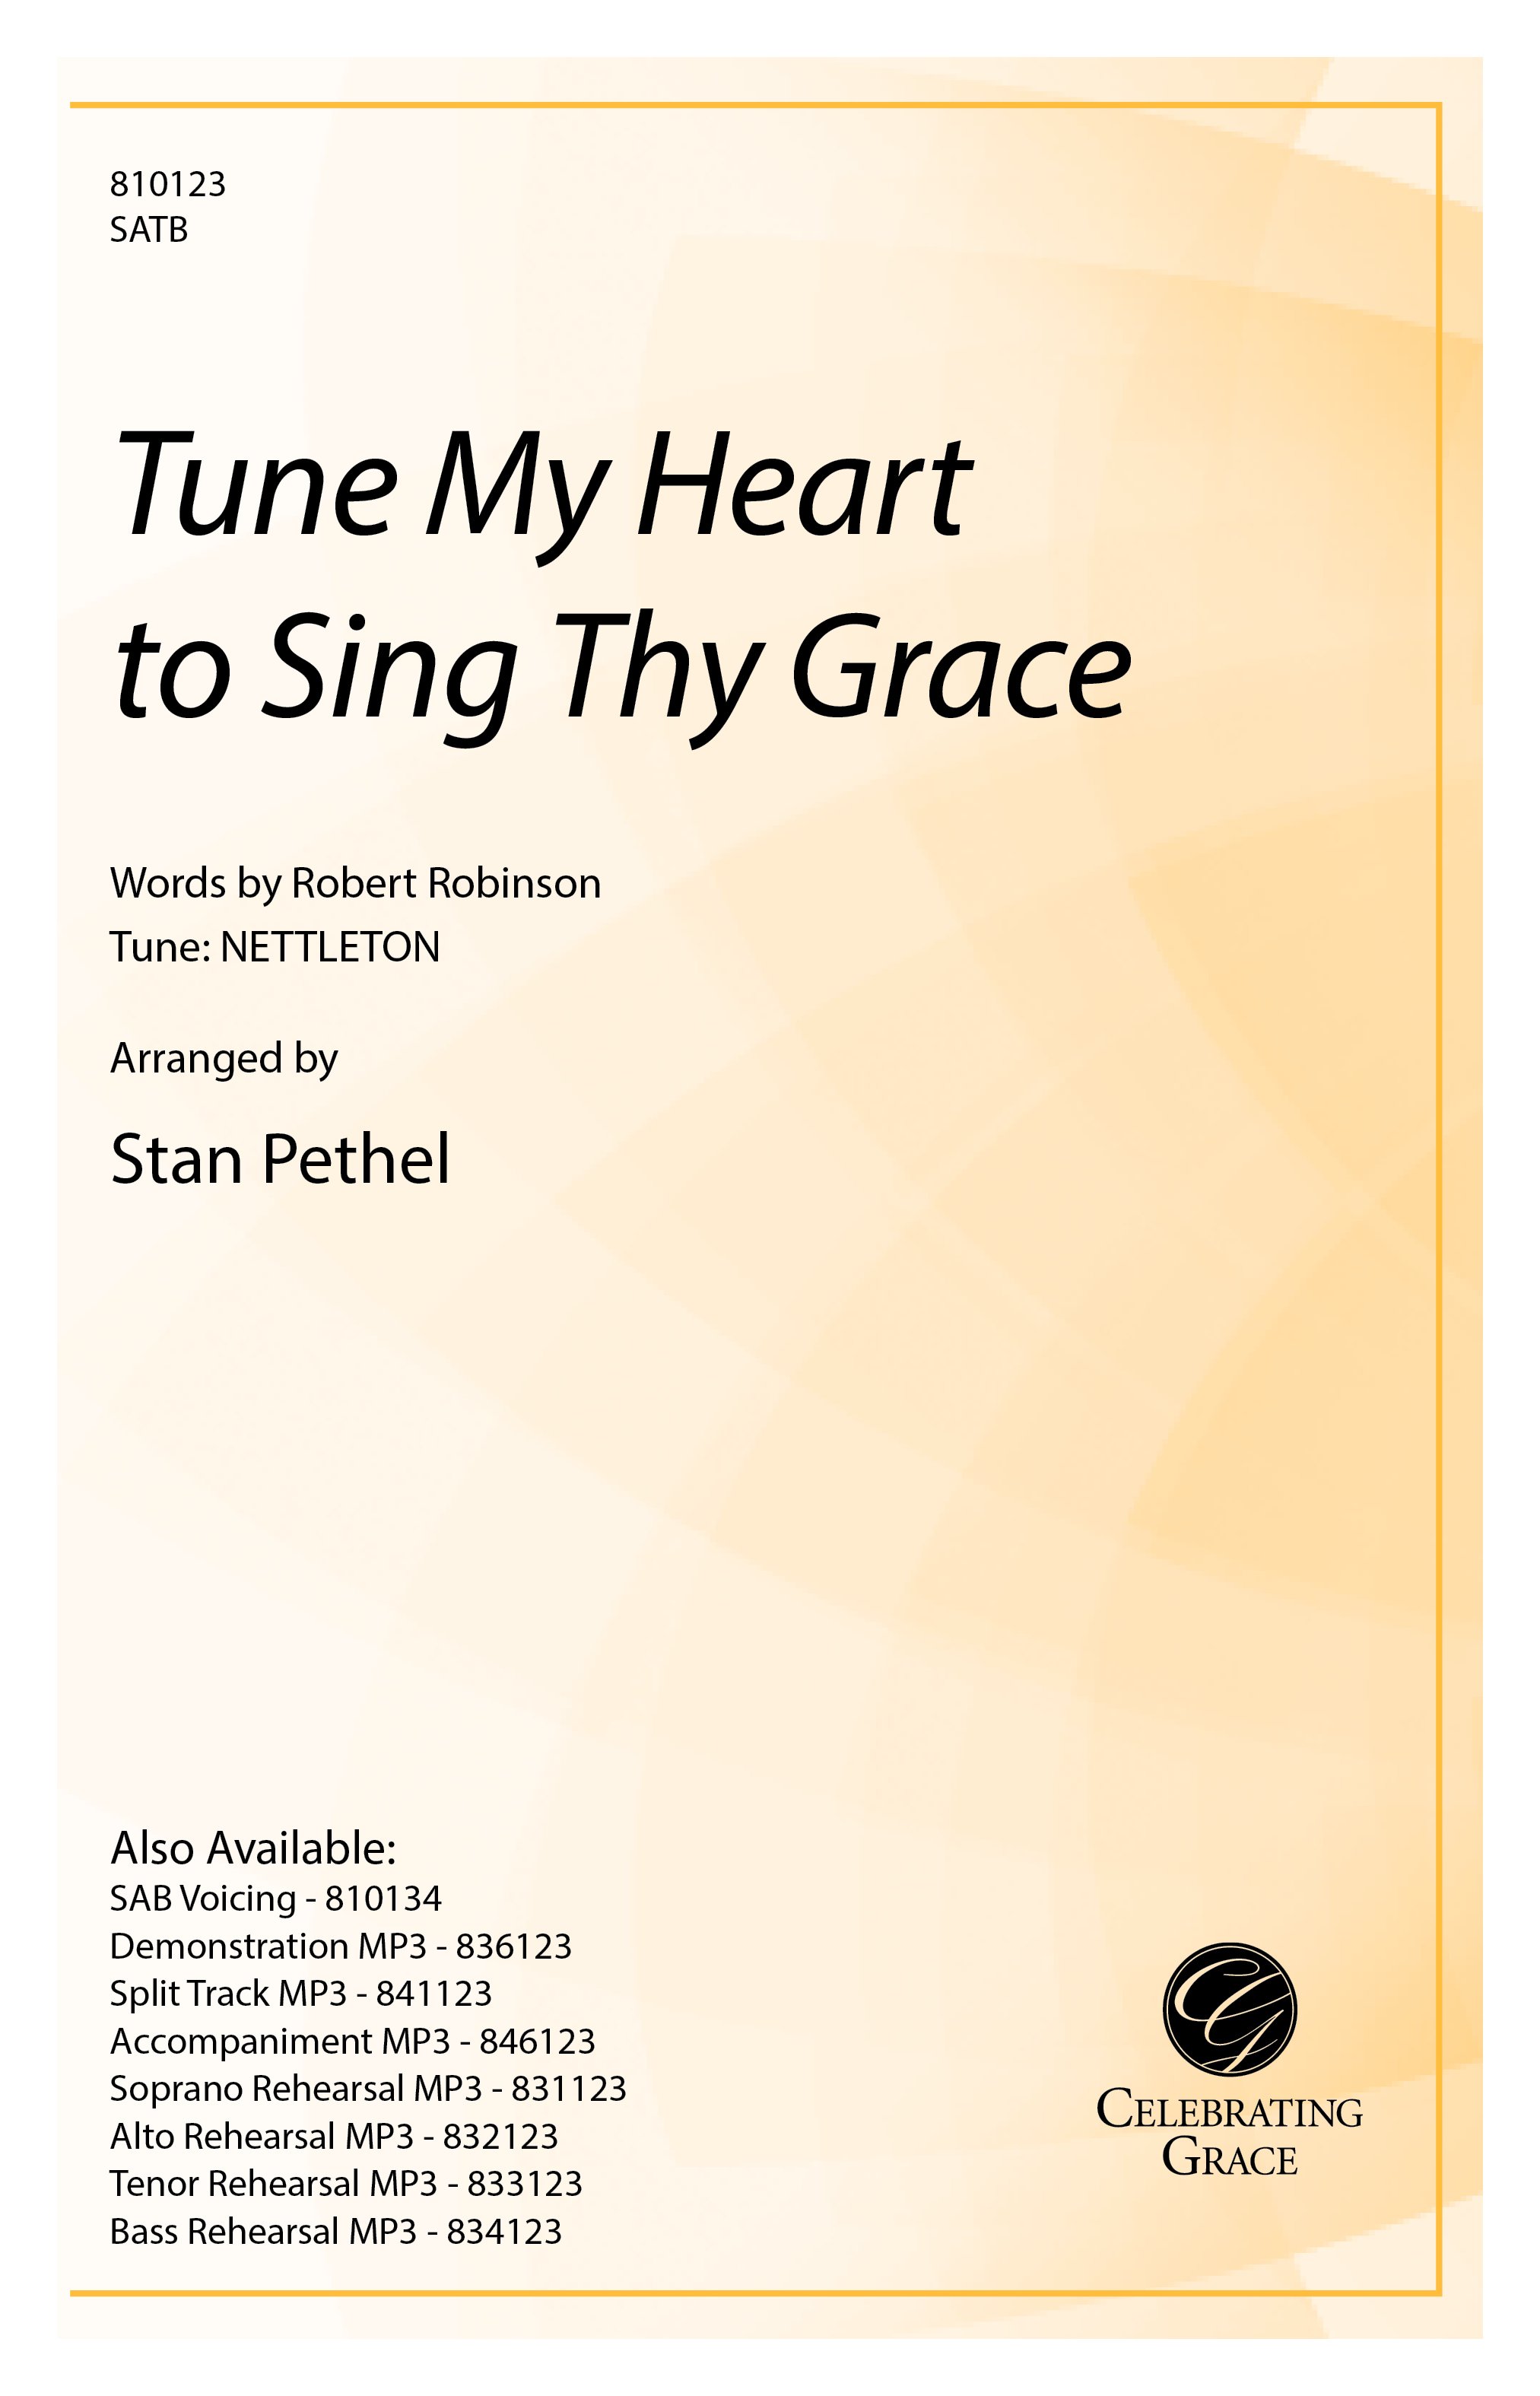 Tune My Heart to Sing Thy Grace church choir sheet music cover